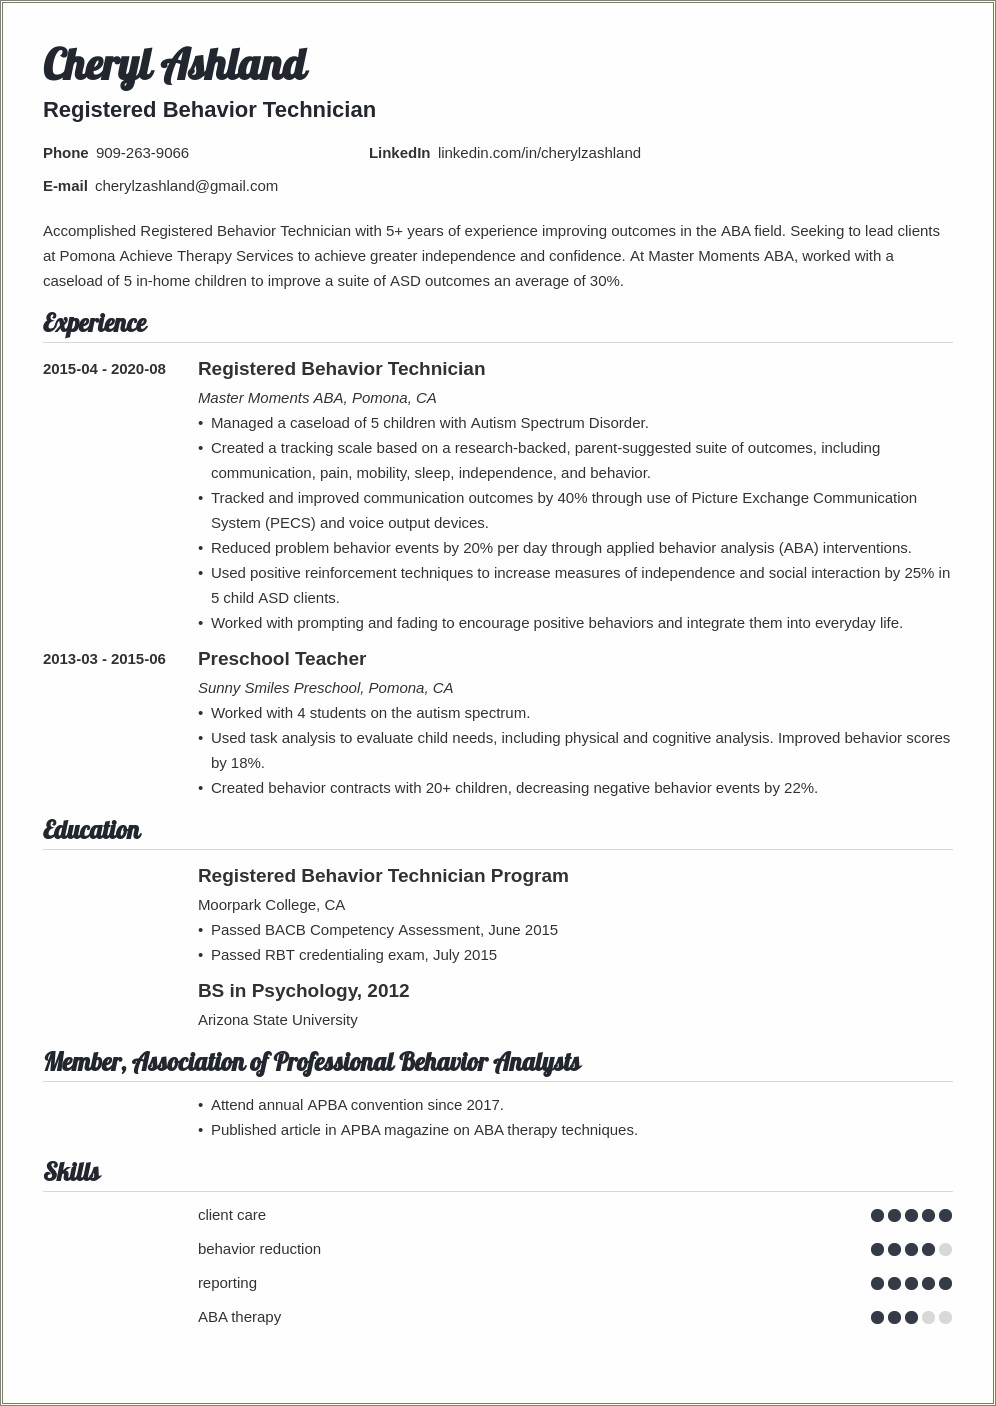 Mental Health Technician Job Description For Resume